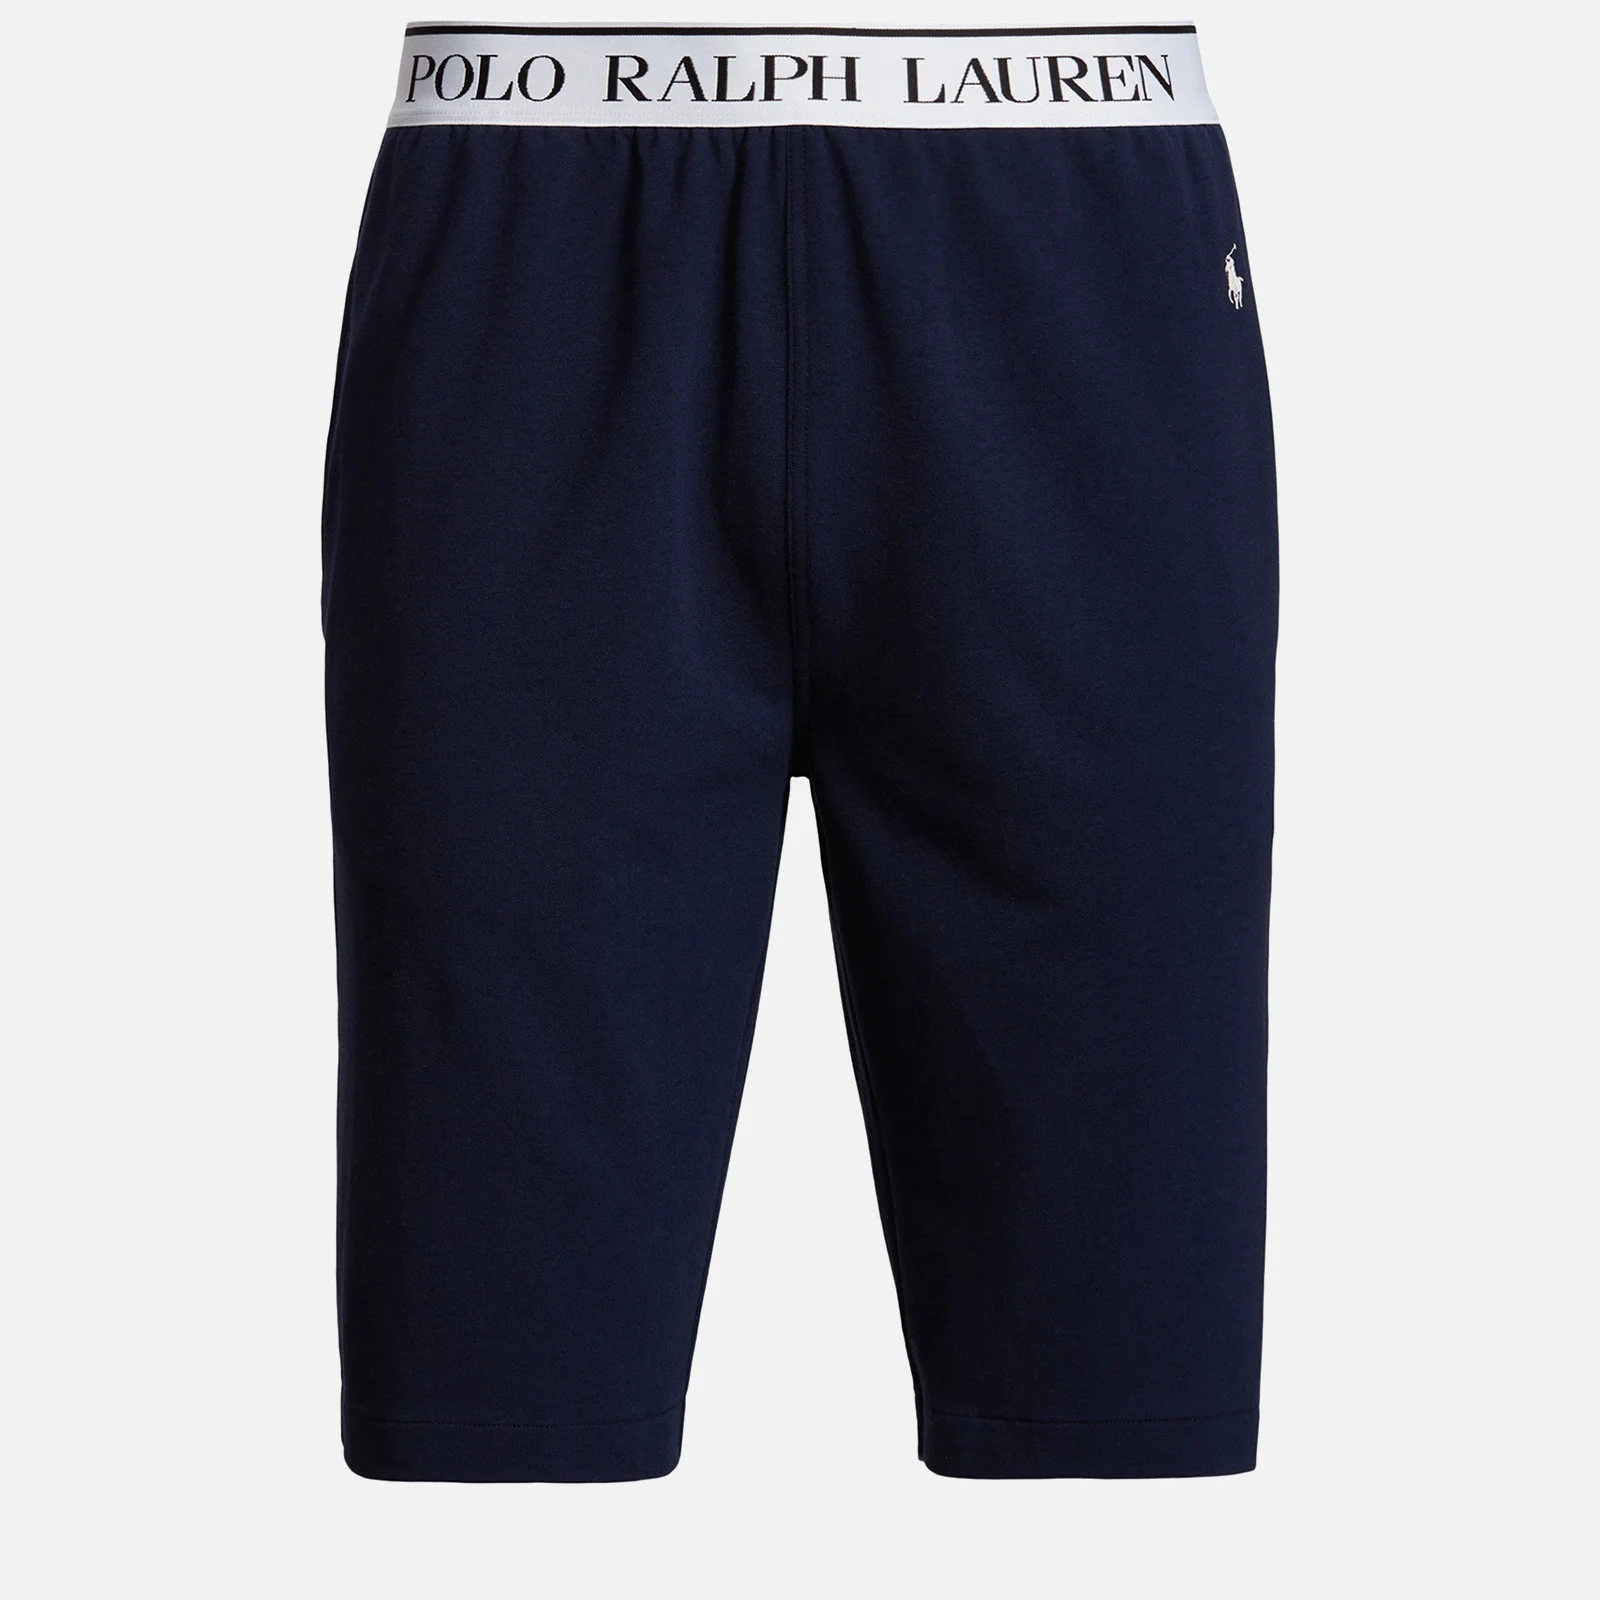 Polo Ralph Lauren Men's Lightweight Fleece Sleep Shorts - Polo Black Image 1